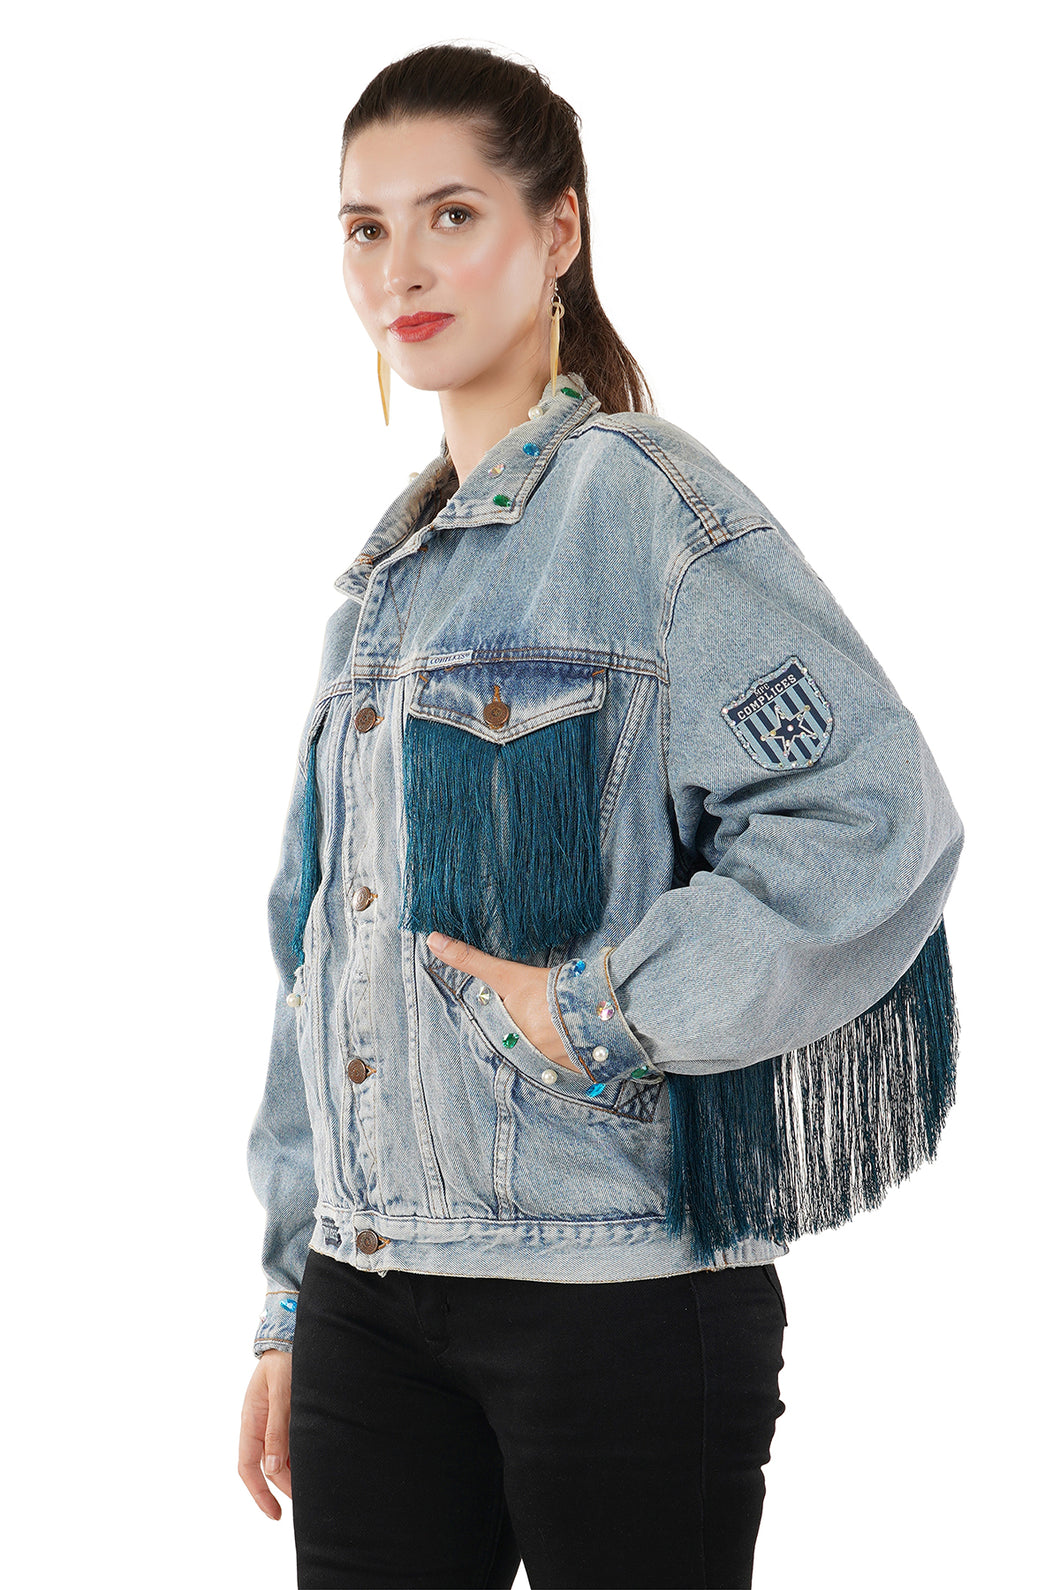 Jova Denim Jacket For Women's D Tassel Fringed Pearl Denim Jacket